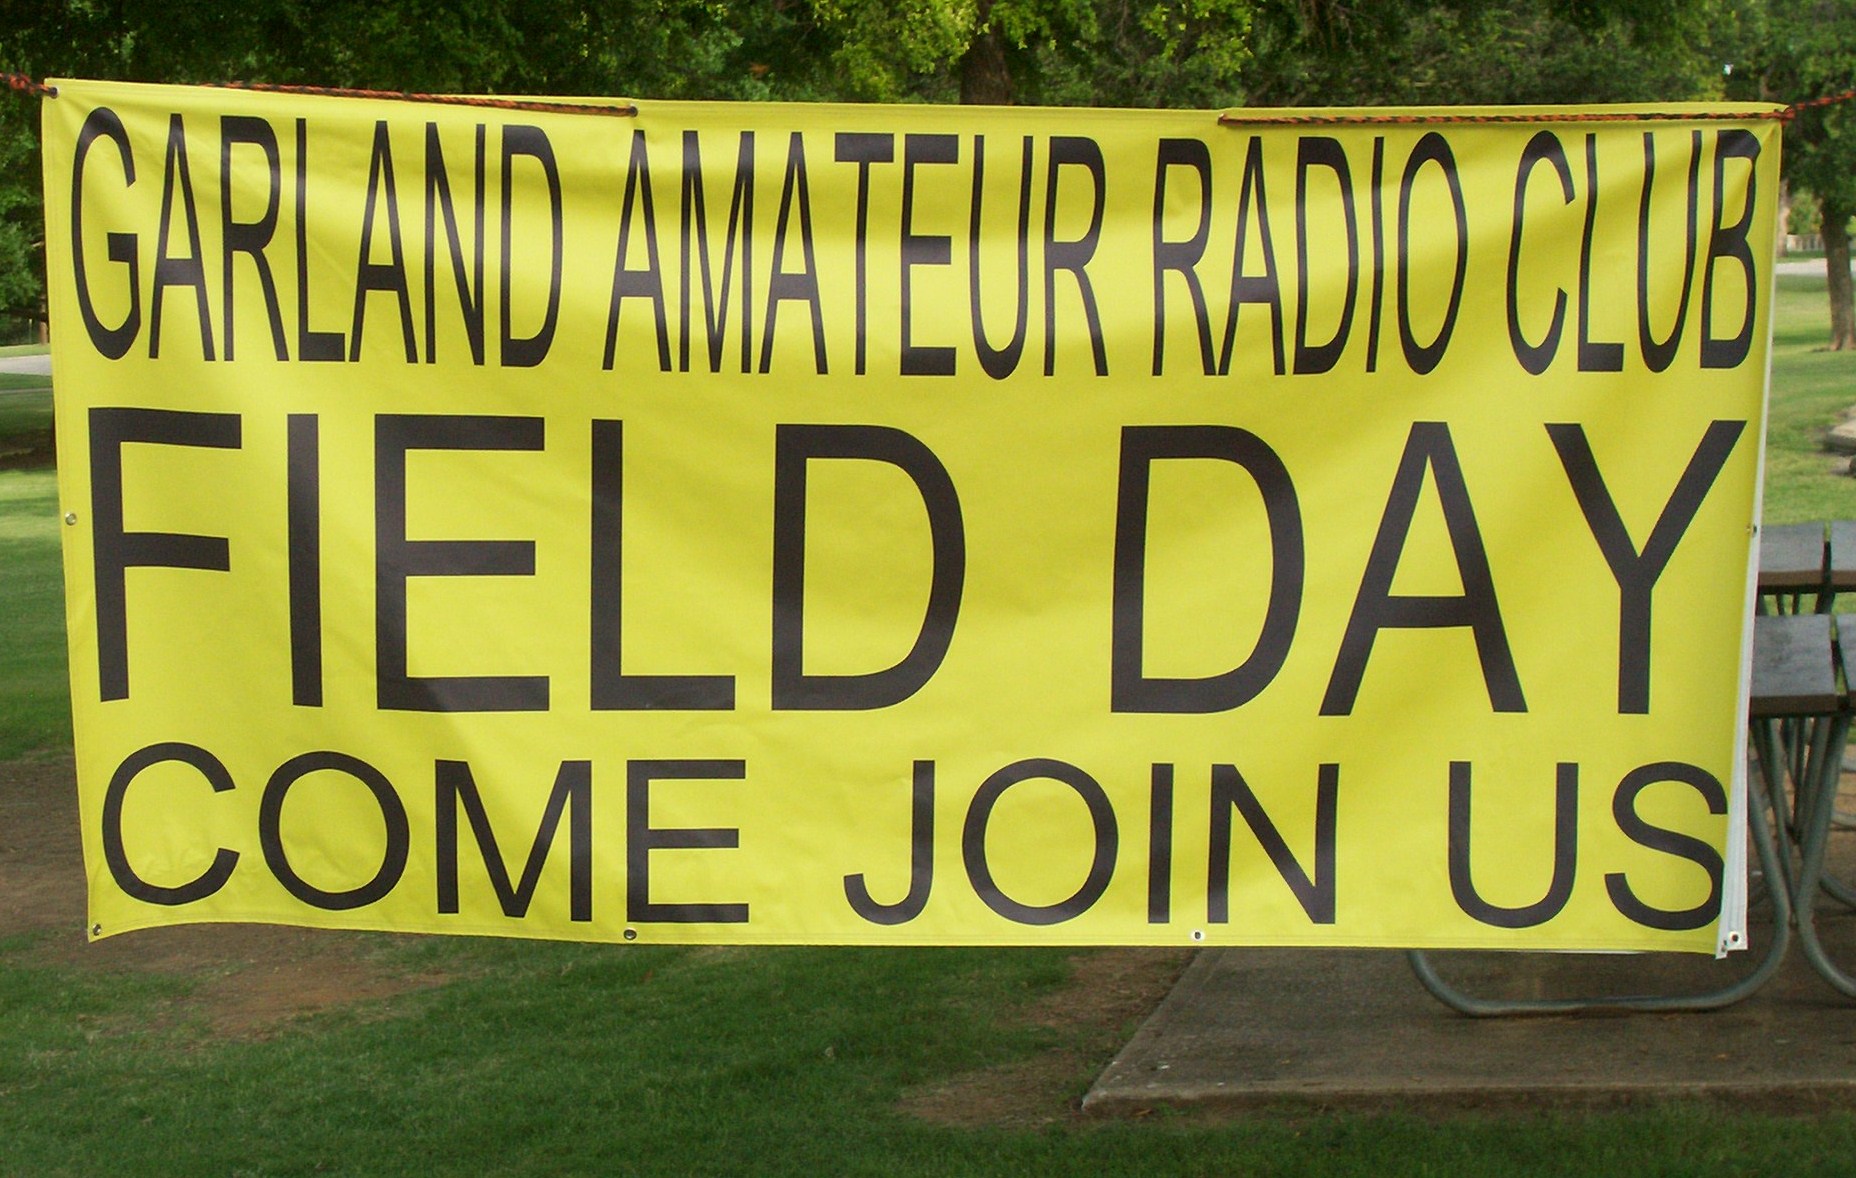 K5QHD - Garland Amateur Radio Club Field Day 2013 at Central Park